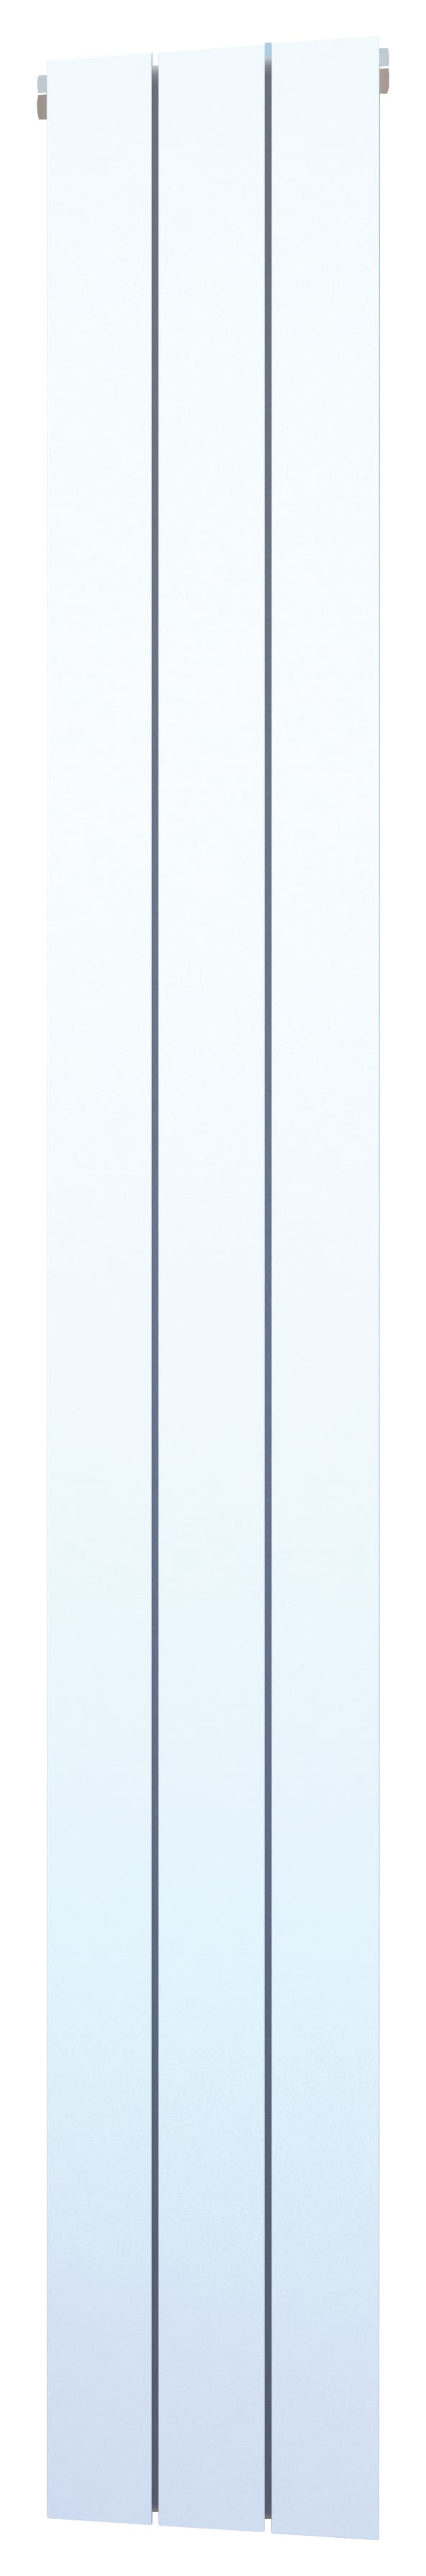 Towelrads Hanworth Vertical Designer Radiator - White 1800mm